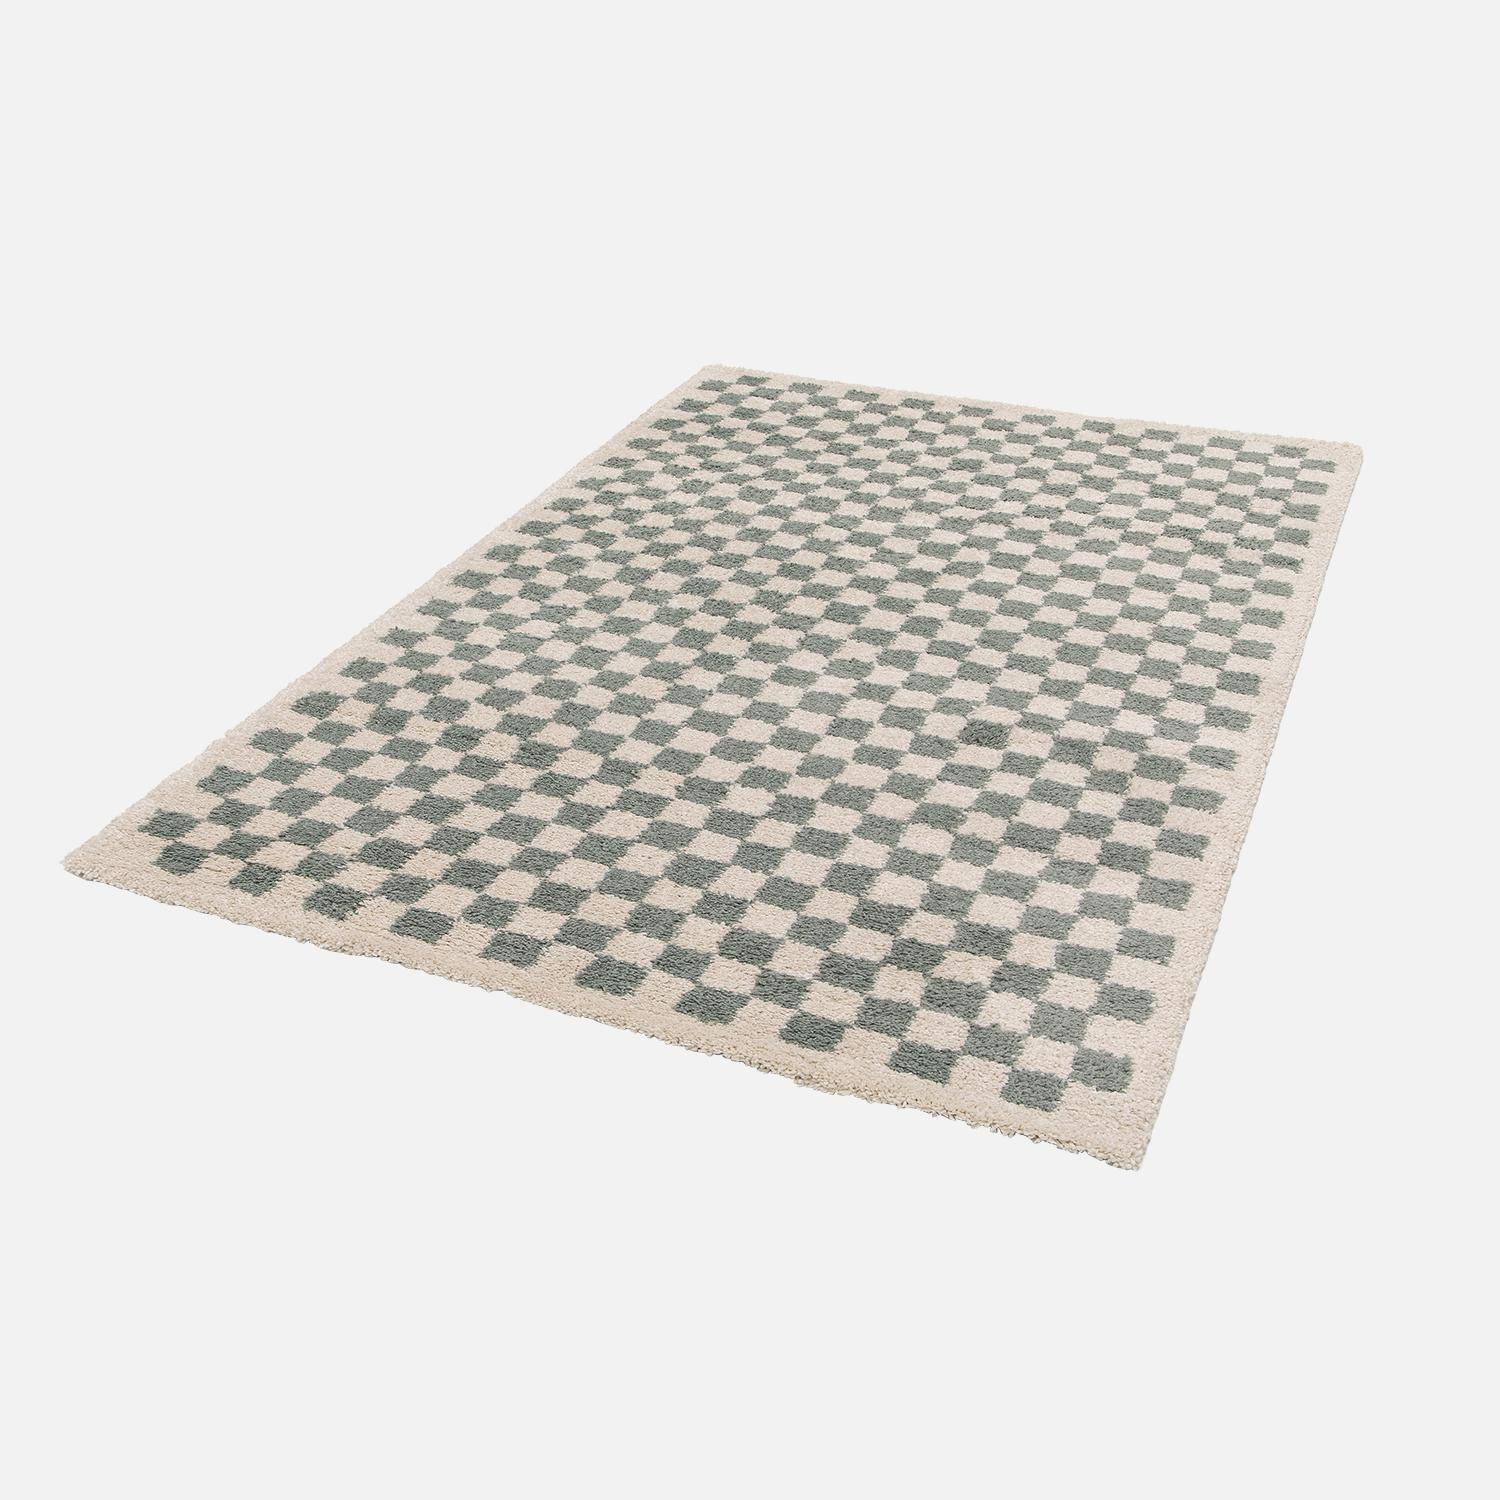 Light blue and cream checkerboard interior rug, Taylor, 160 x 230 cm Photo3